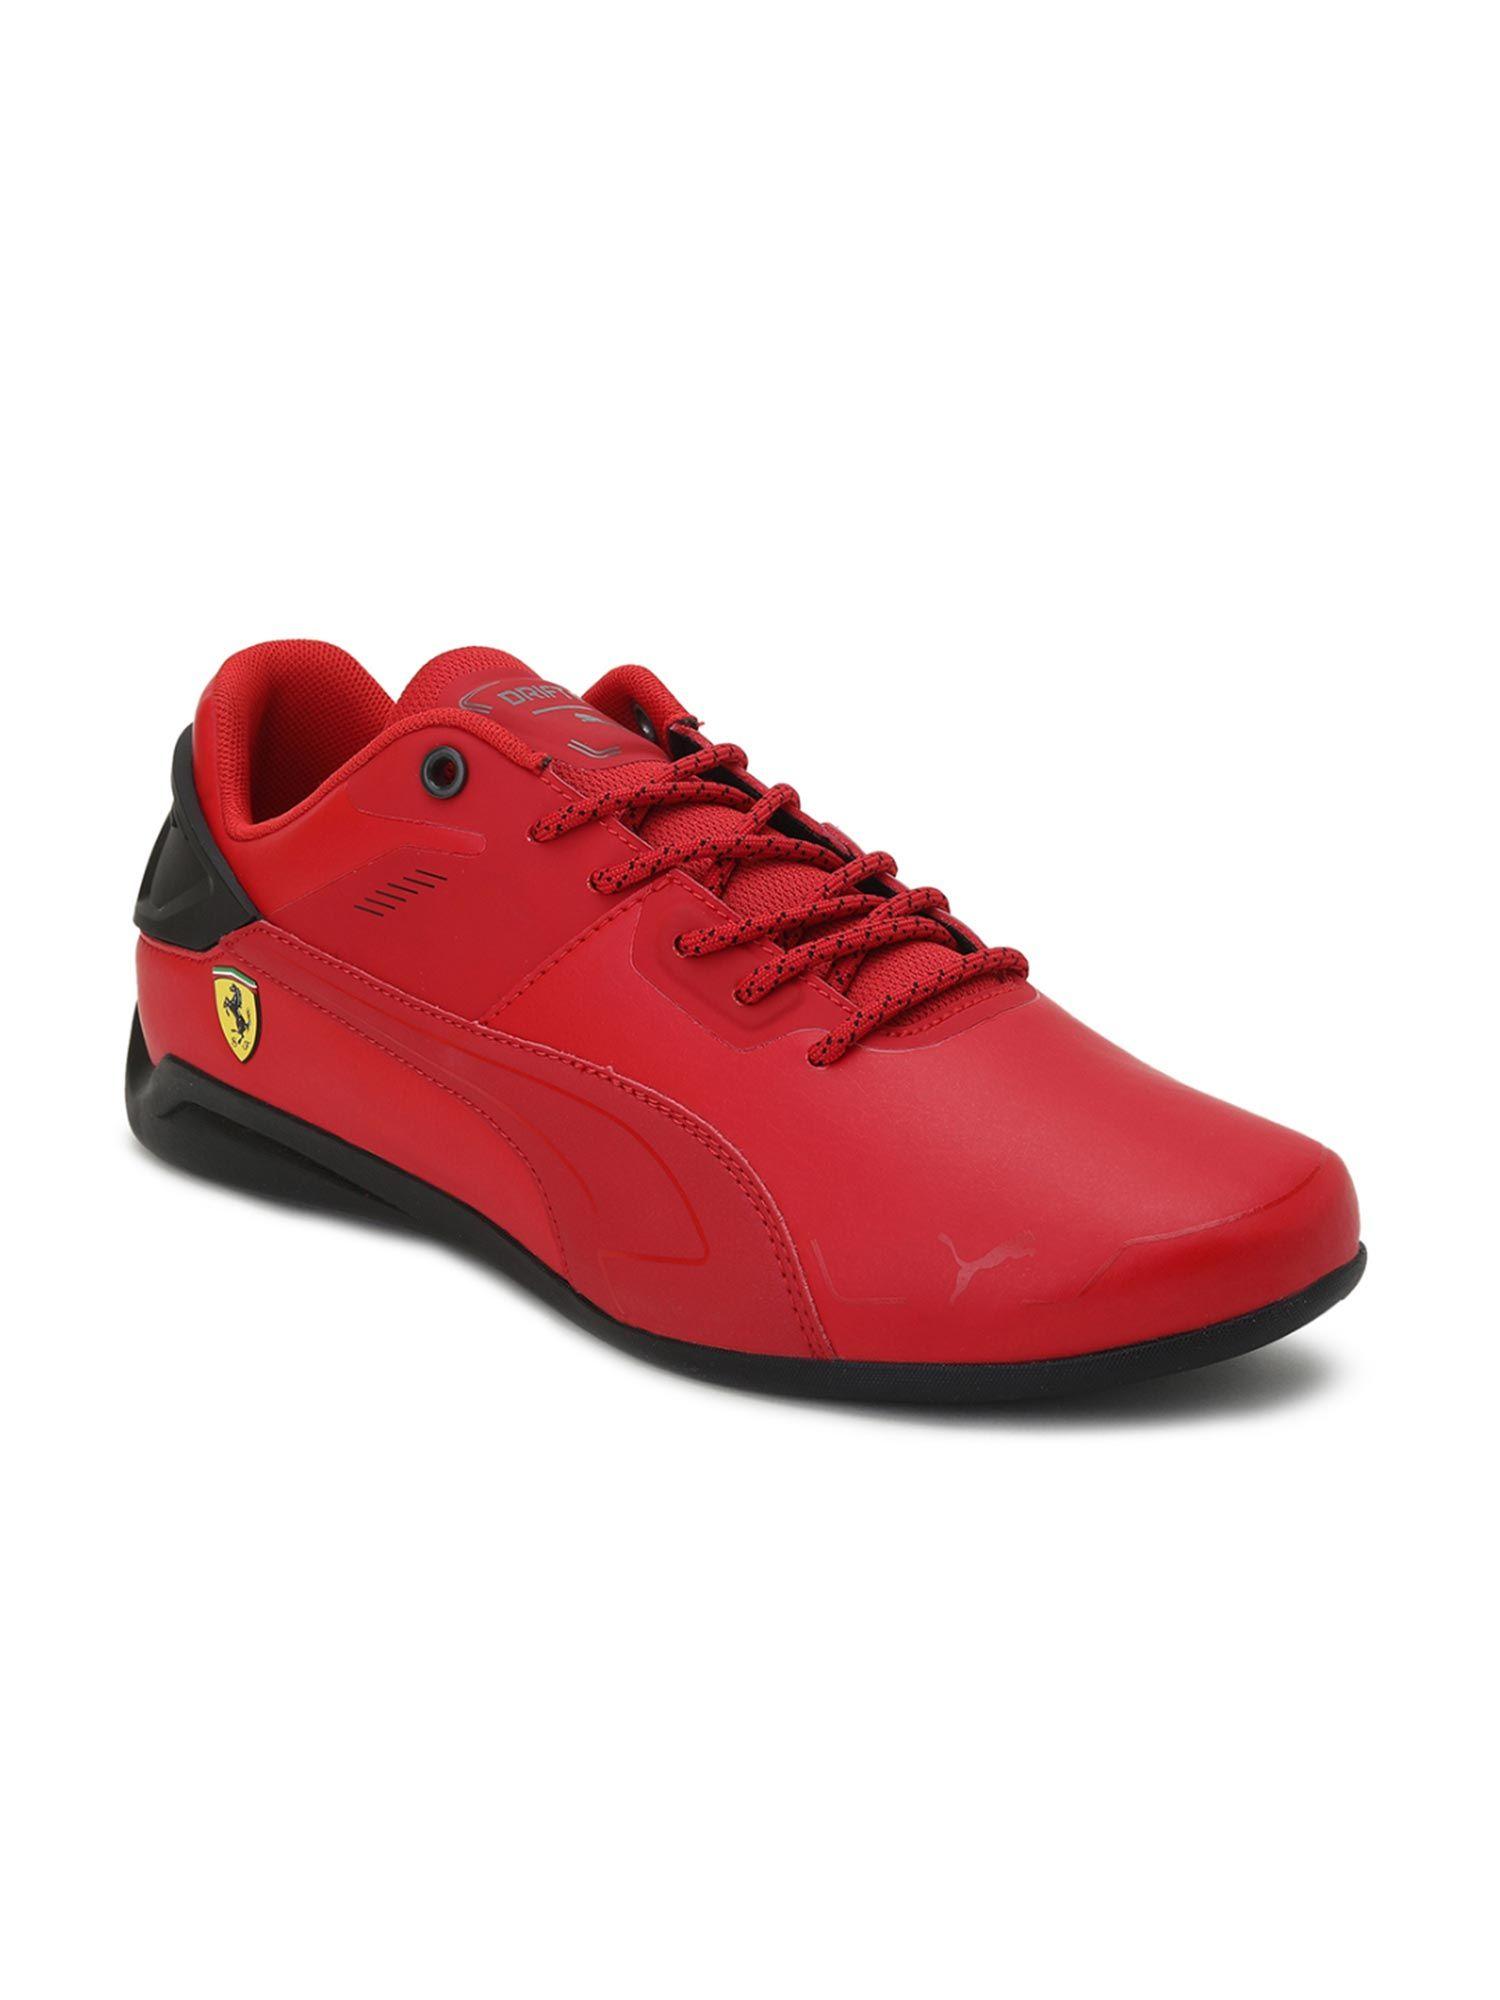 Ferrari Motorsport Drift Cat Unisex Red Casual Shoes